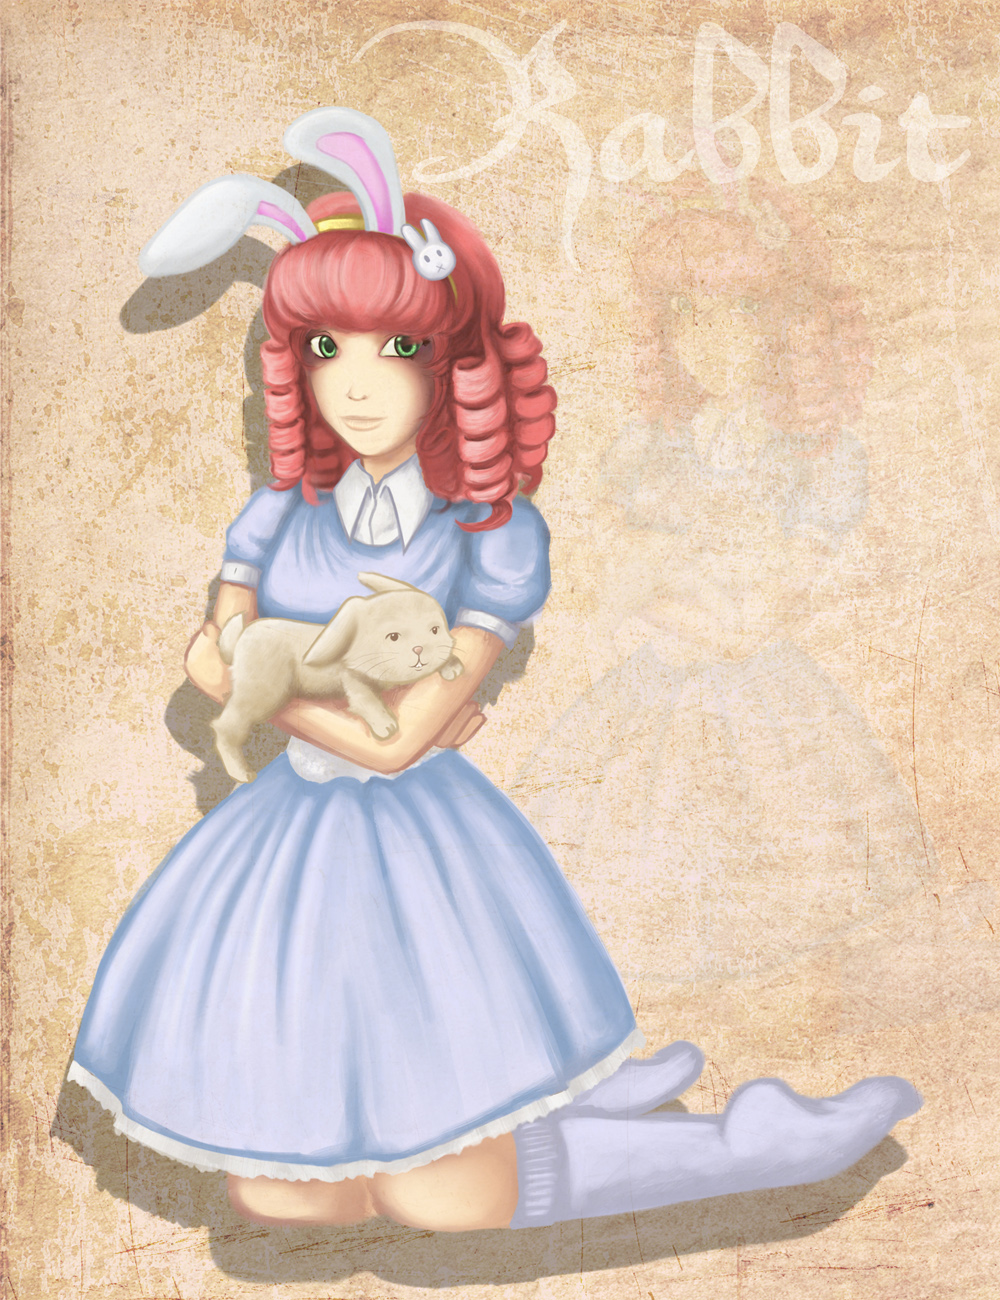 Rabbit Girl by Narla